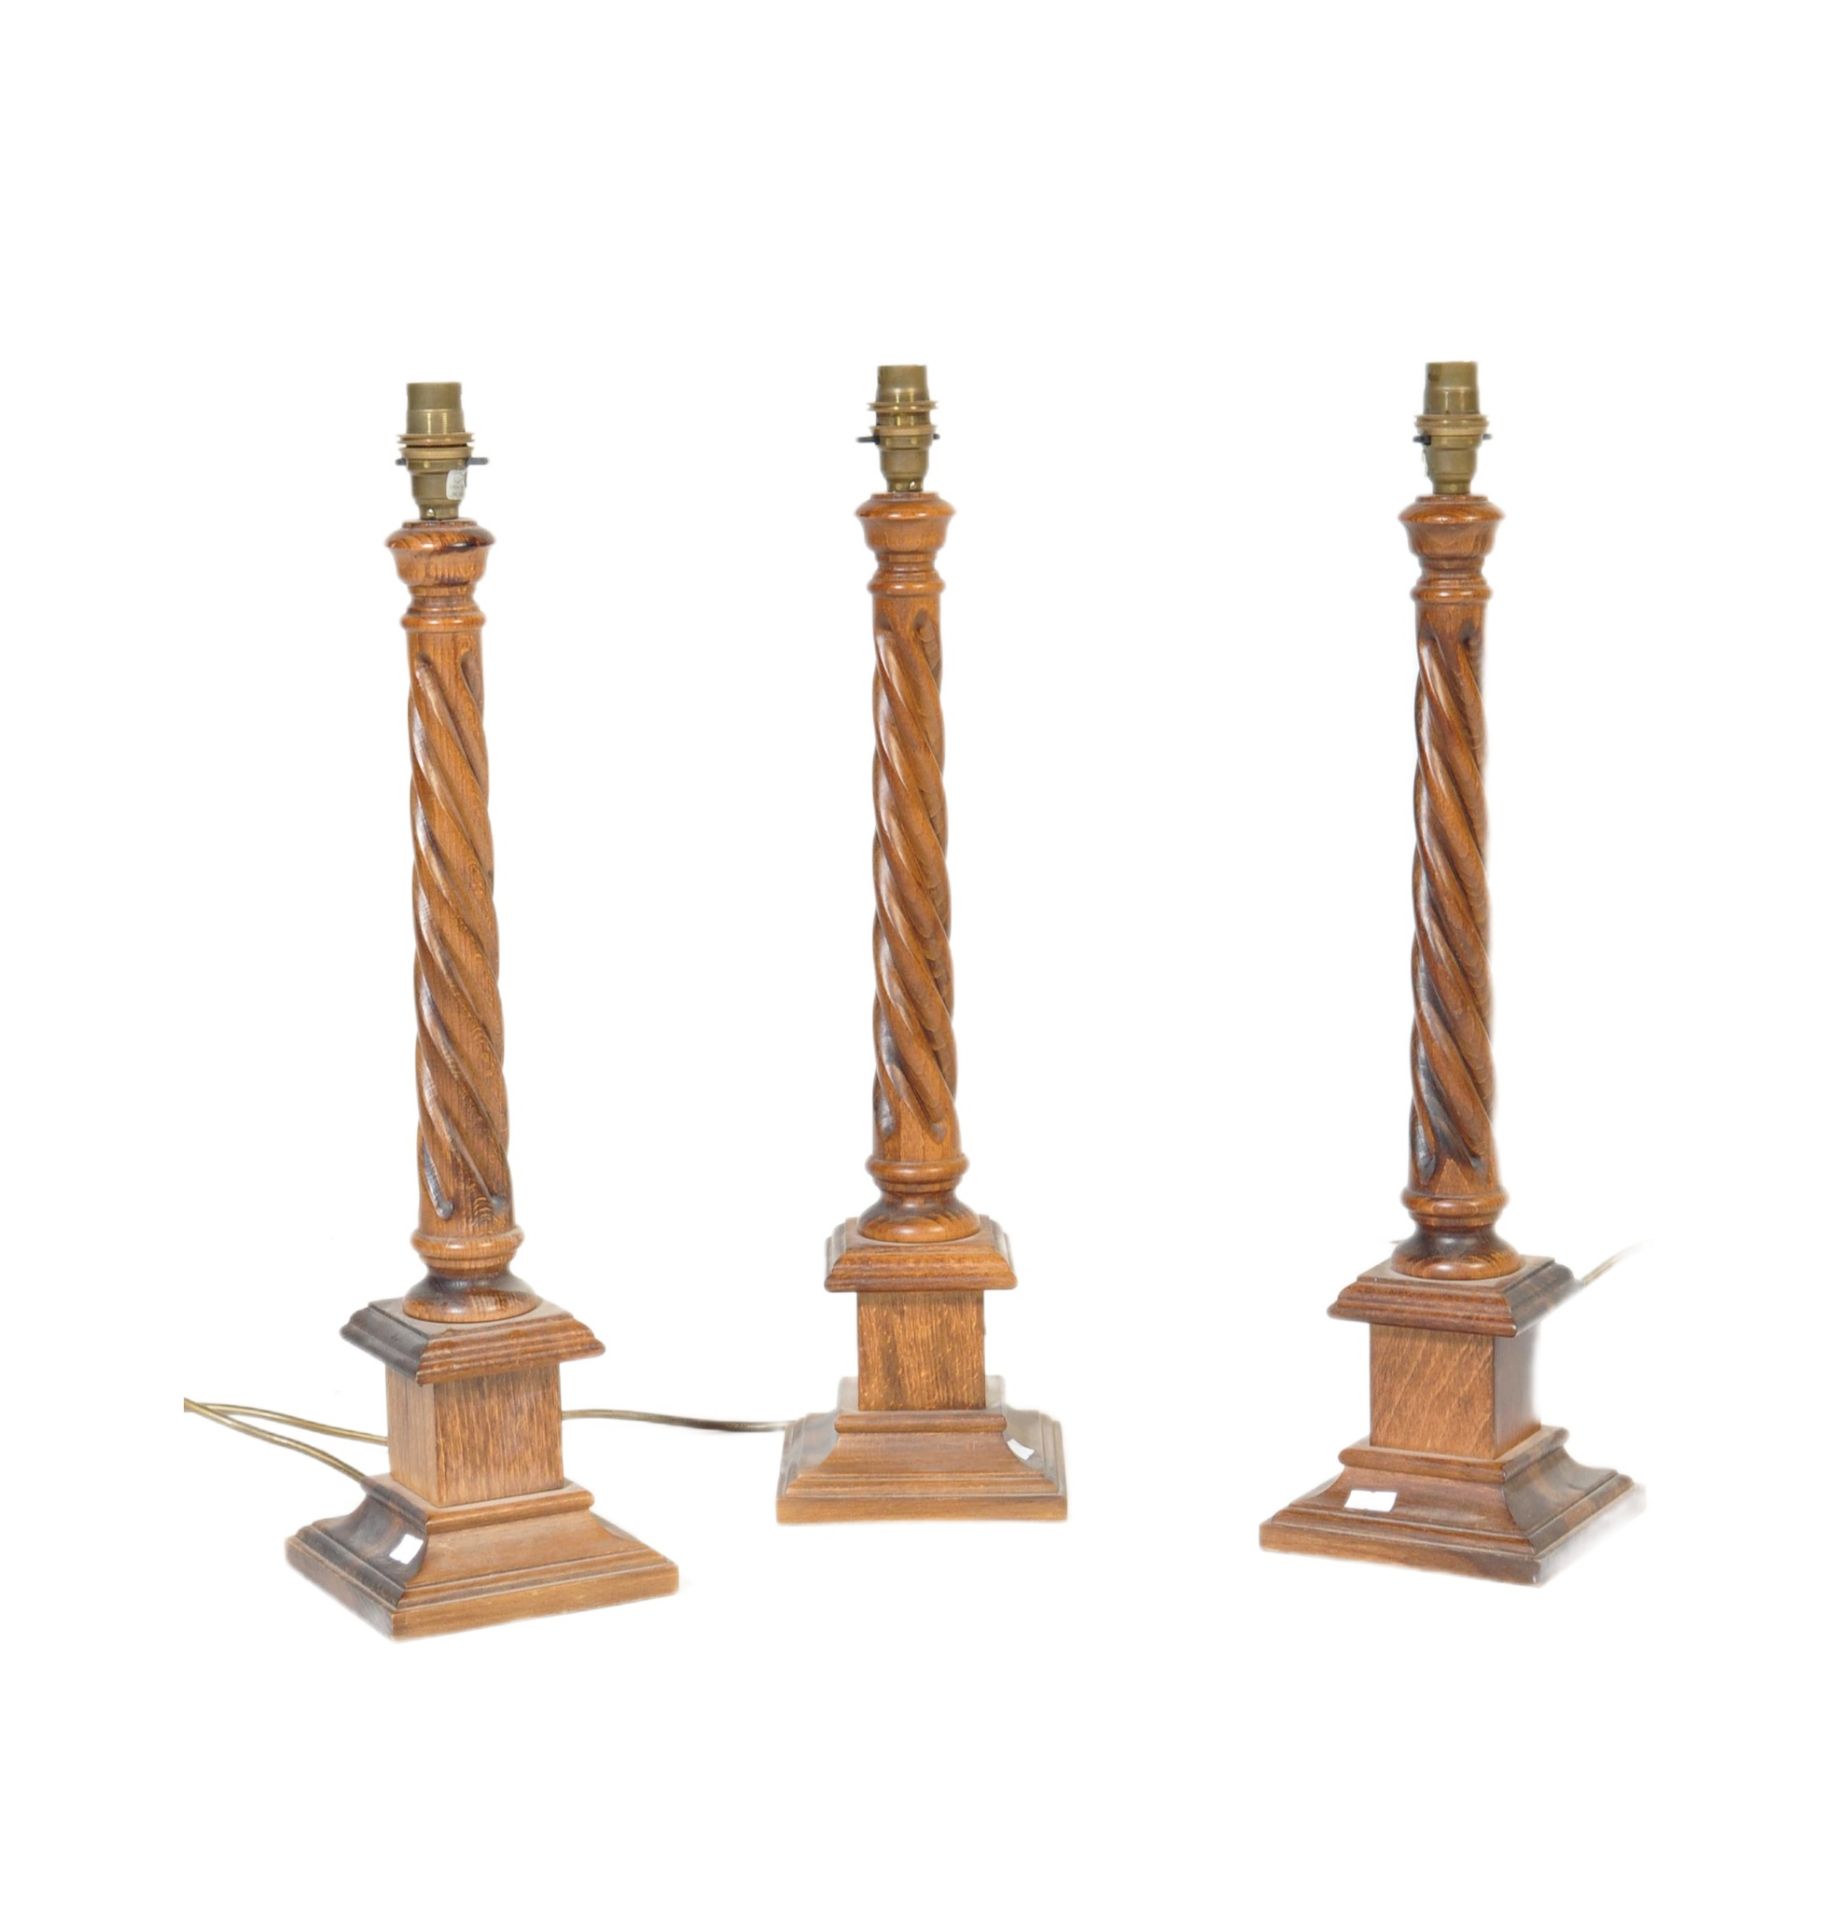 COLLECTION OF THREE MATCHING OAK BARLEY TWIST LAMP LIGHT BASES